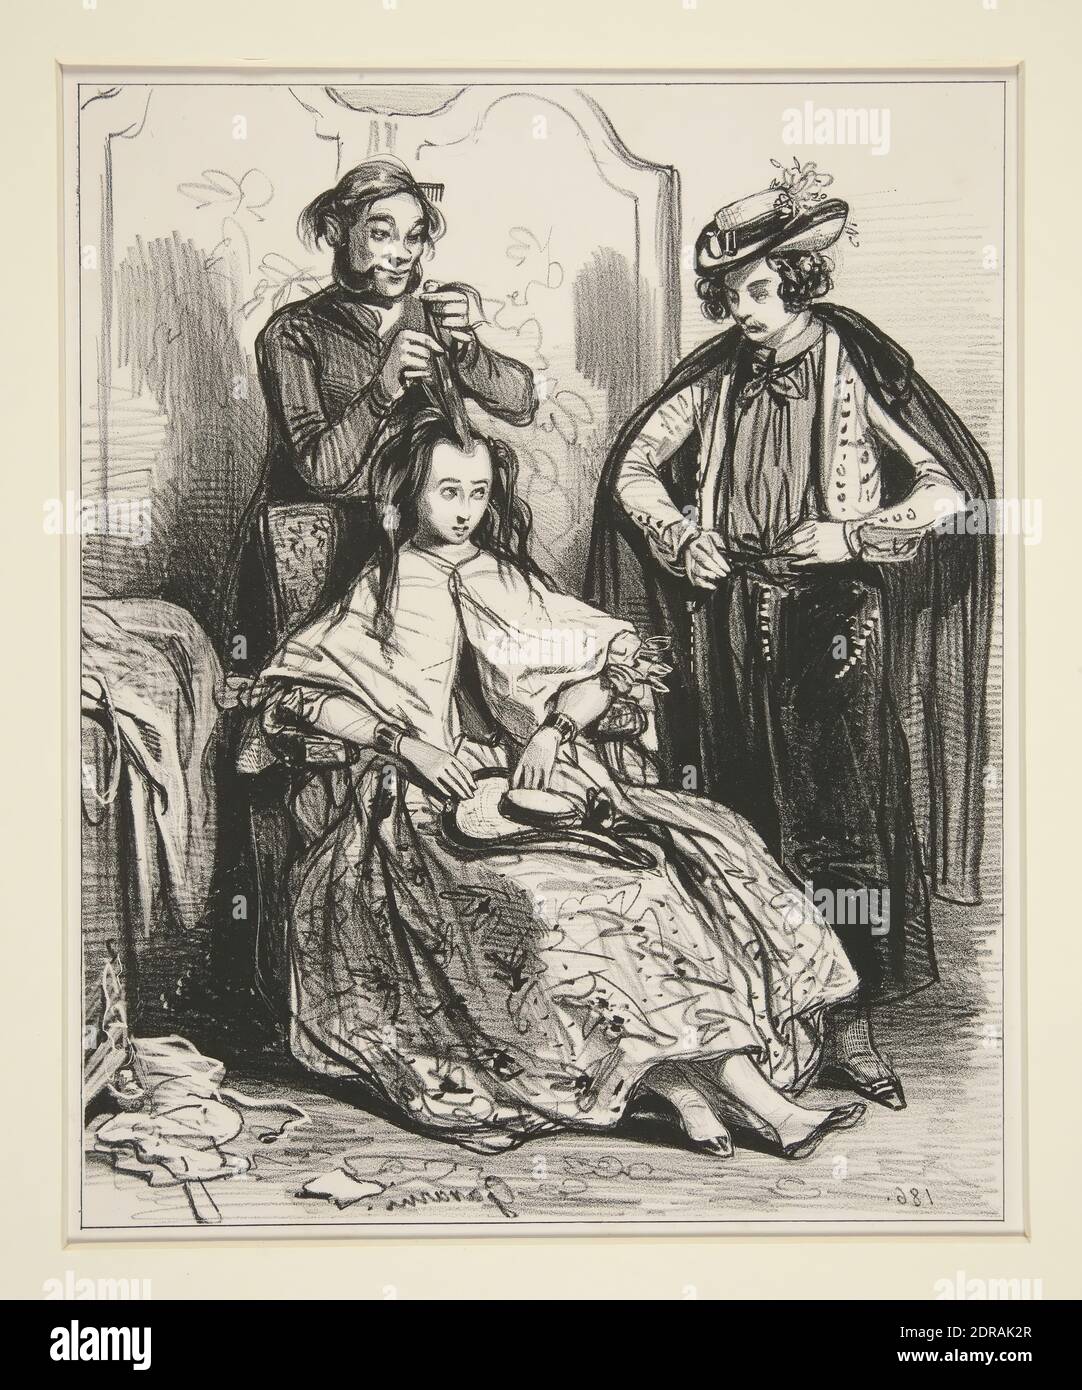 Artist: Paul Gavarni, French, 1804–1866, No. 25 - Le Carnaval - C’est comme ca que t’es prete, toi?…, Lithograph, French, 19th century, Works on Paper - Prints Stock Photo